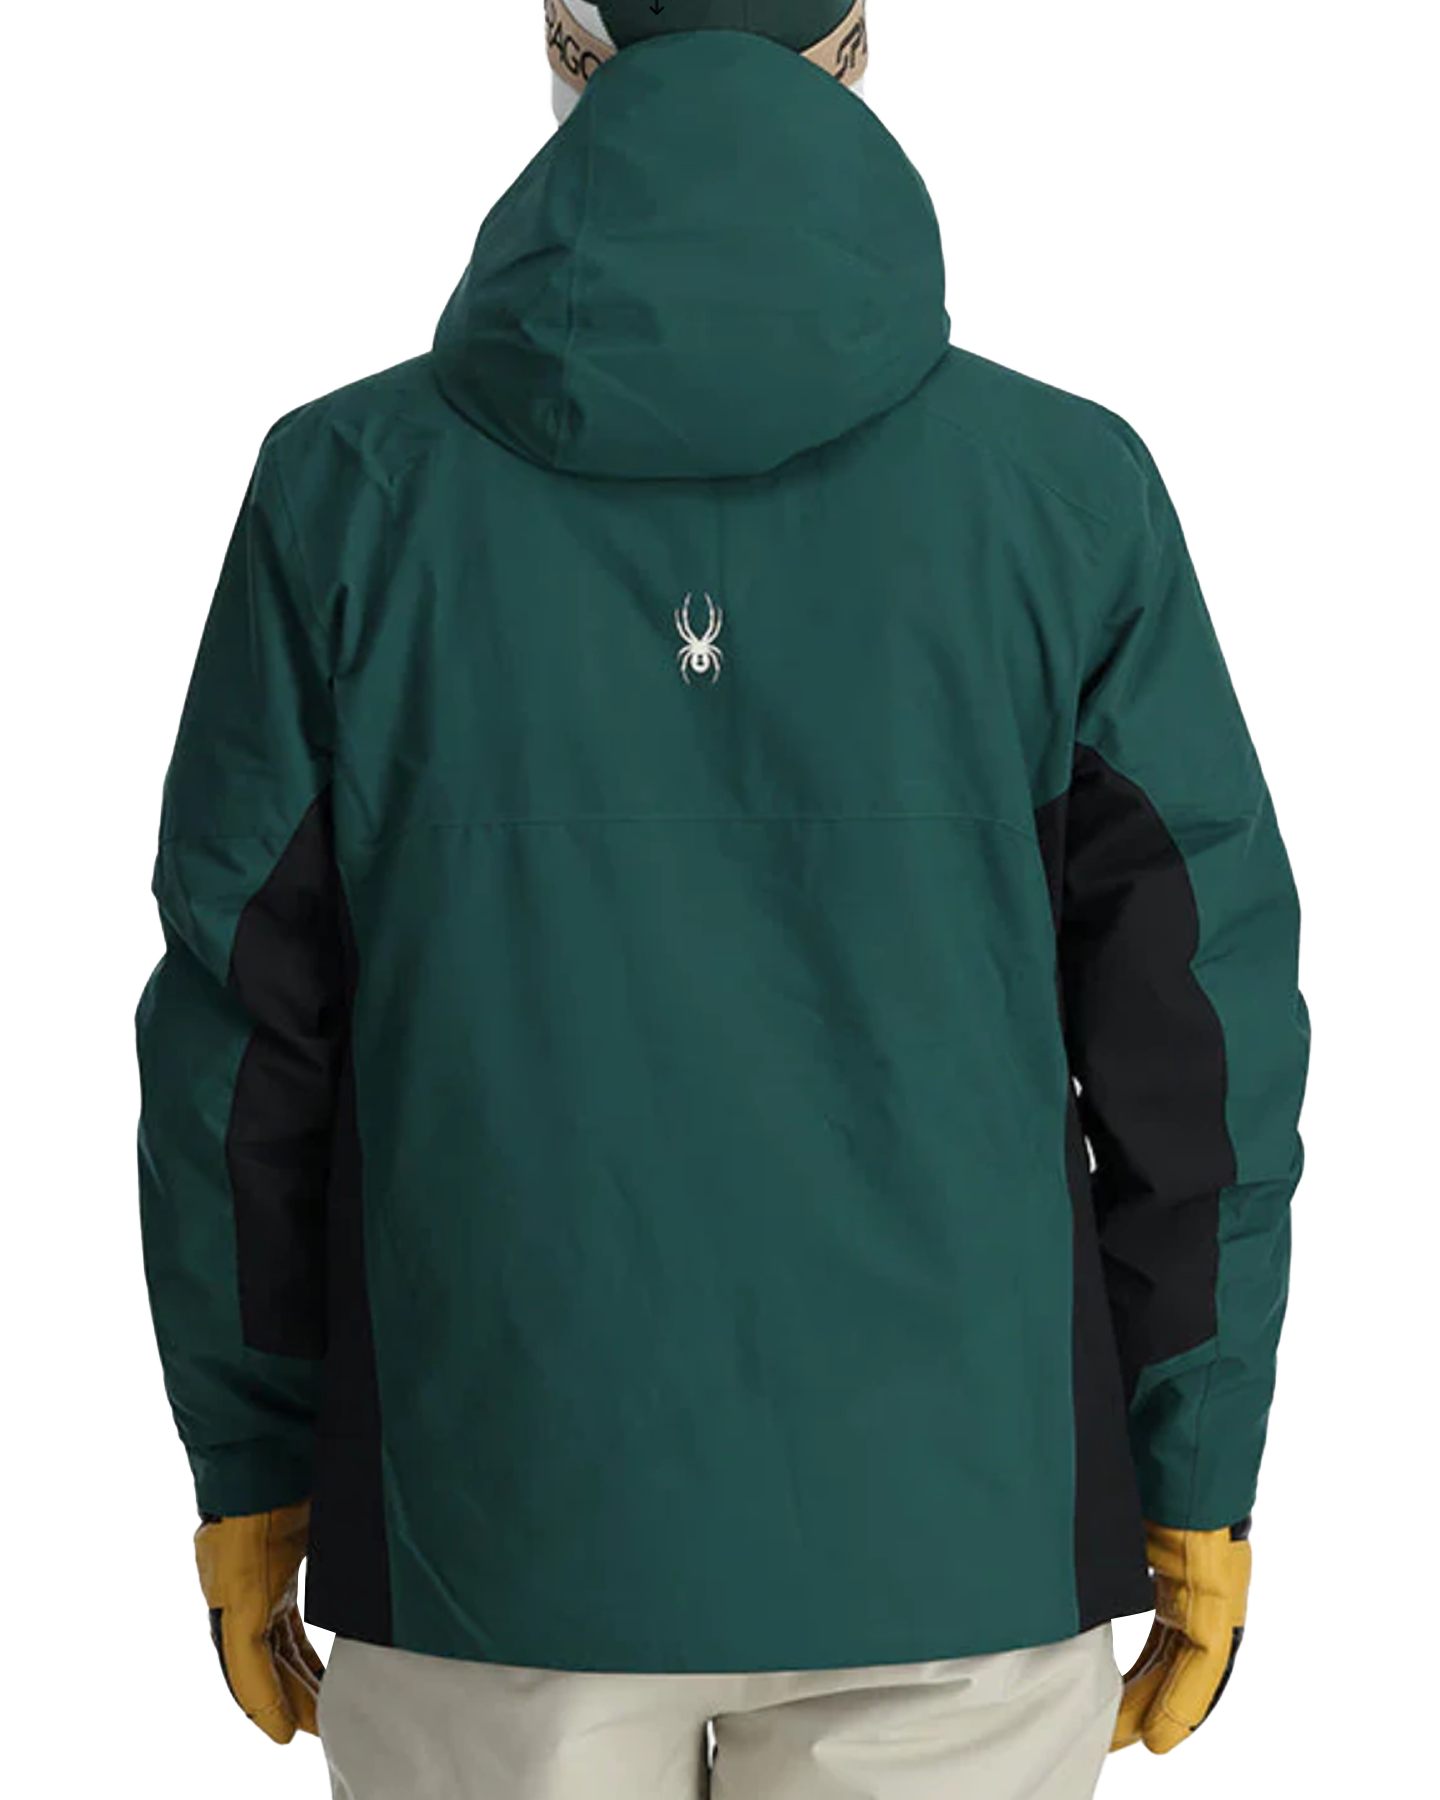 Spyder Primer Jacket - Cypress Green Men's Snow Jackets - SnowSkiersWarehouse